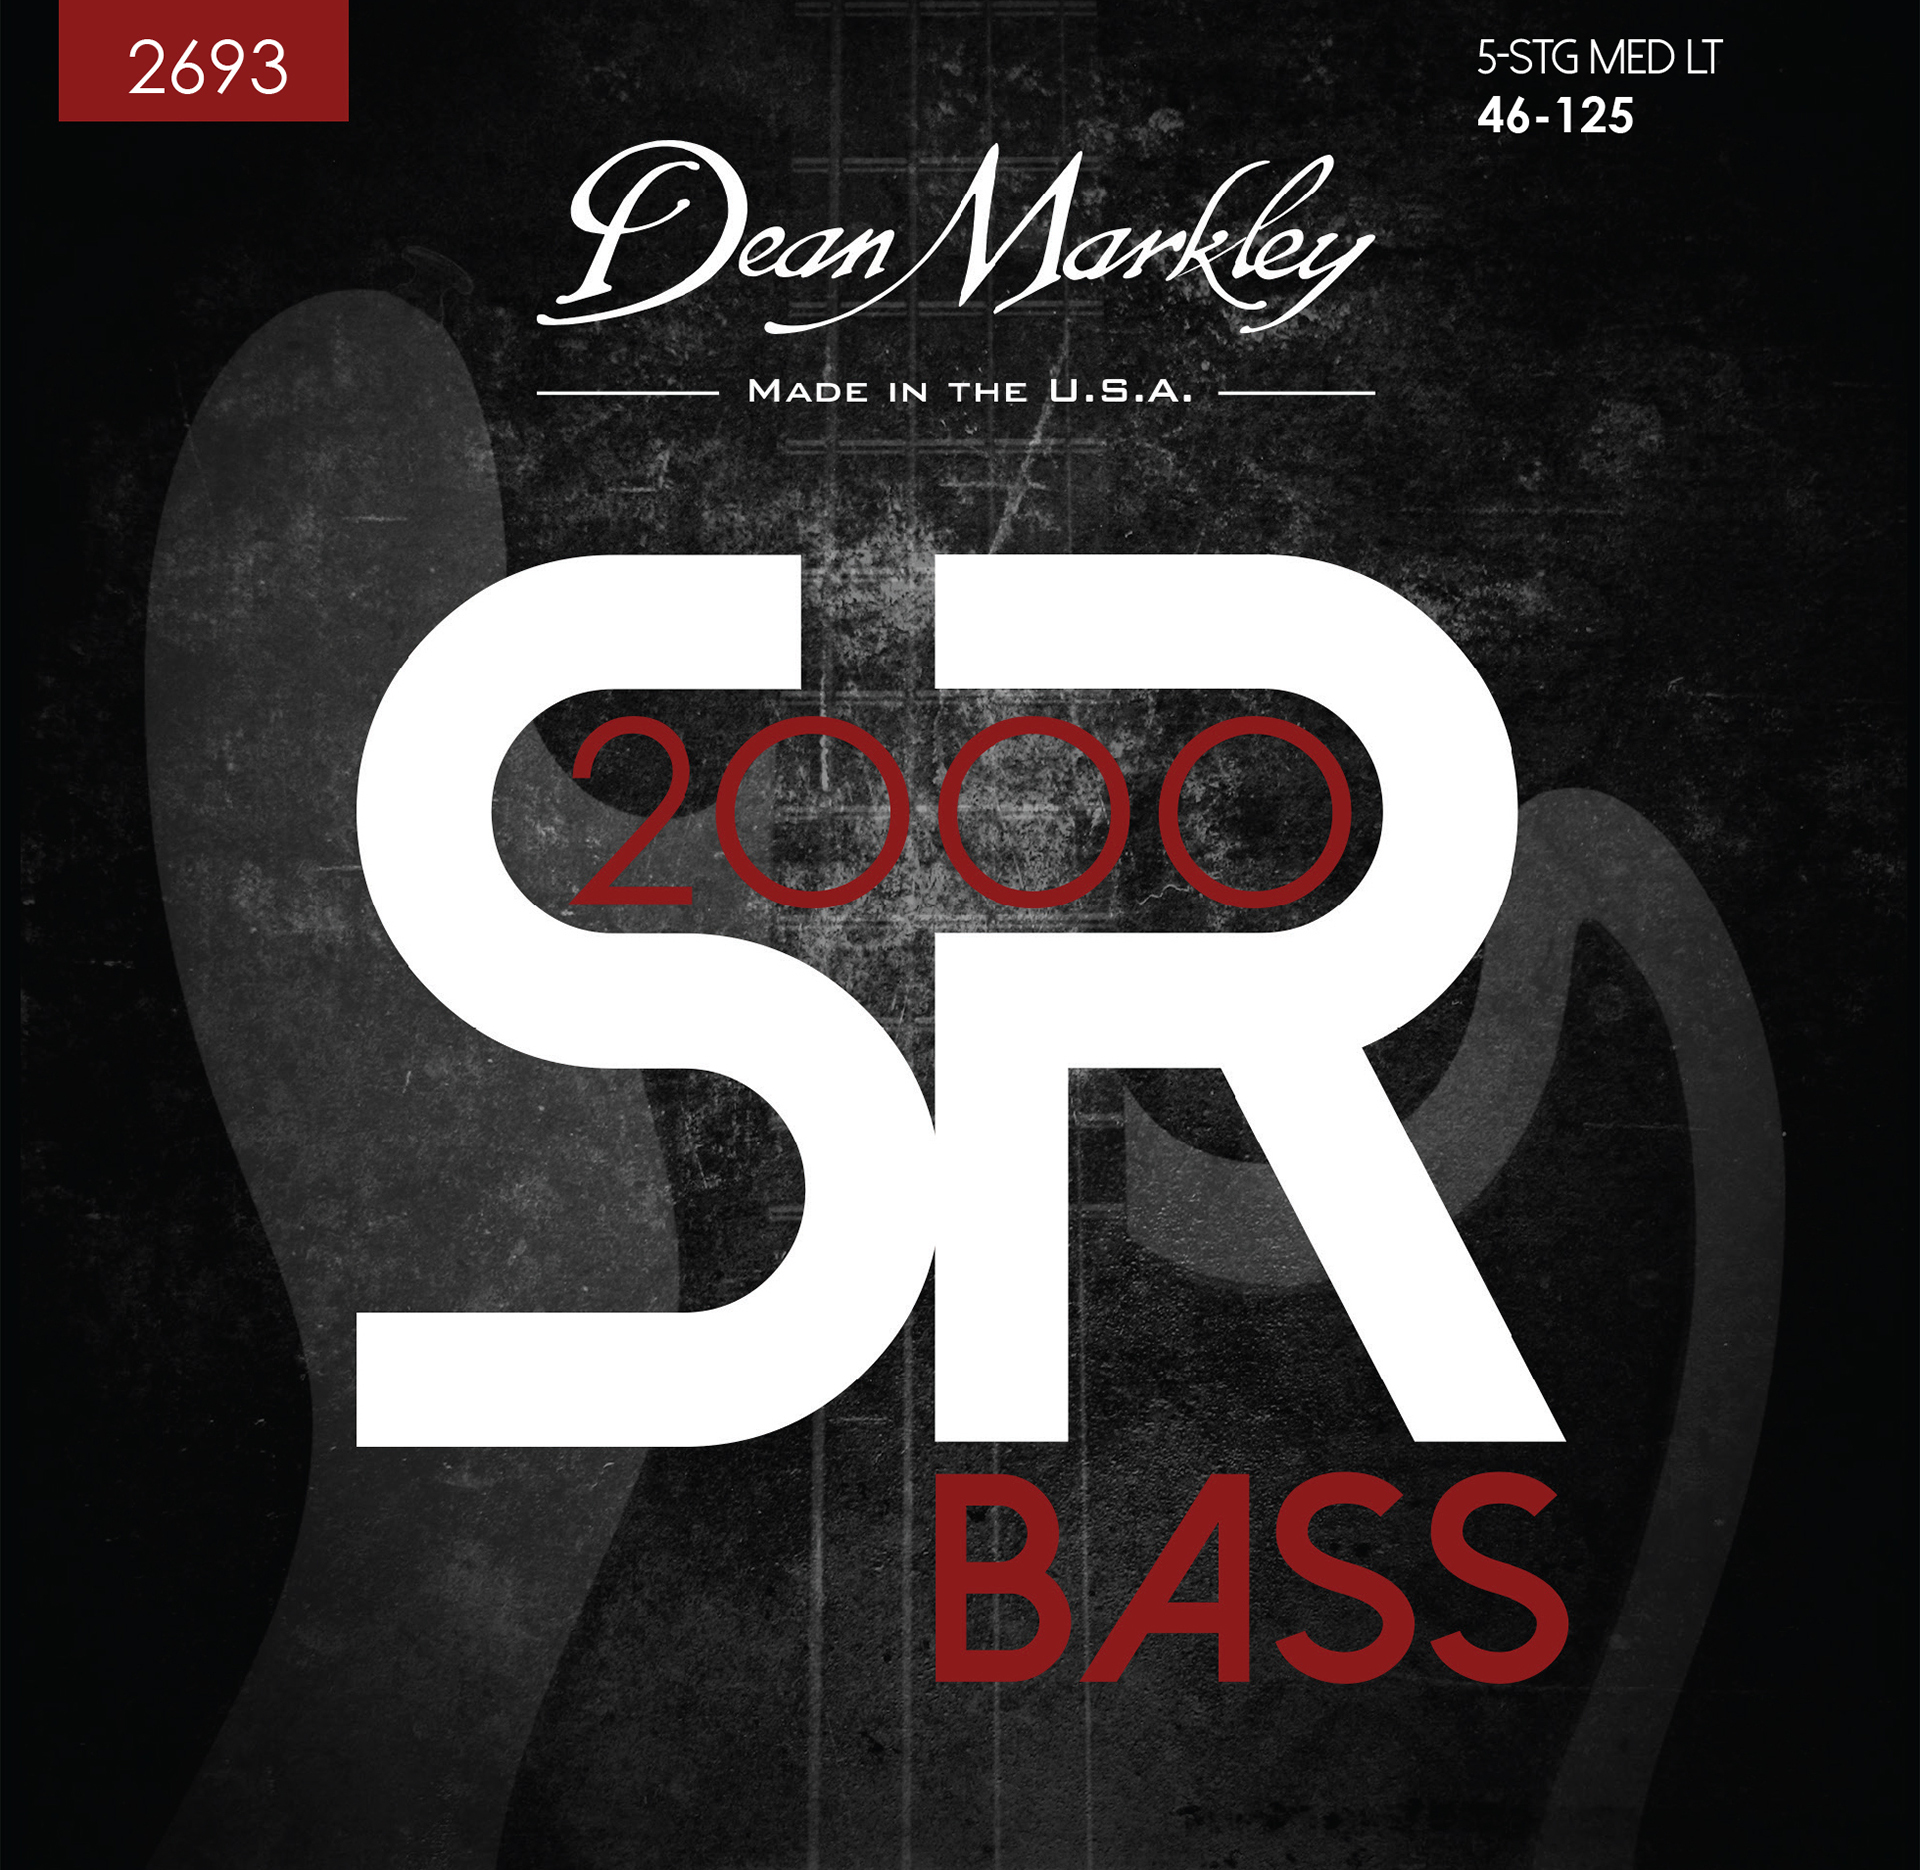 Dean Markley SR 2000 - 2693 - Electric Bass String Set, 5-String, Medium Light, .046-.125